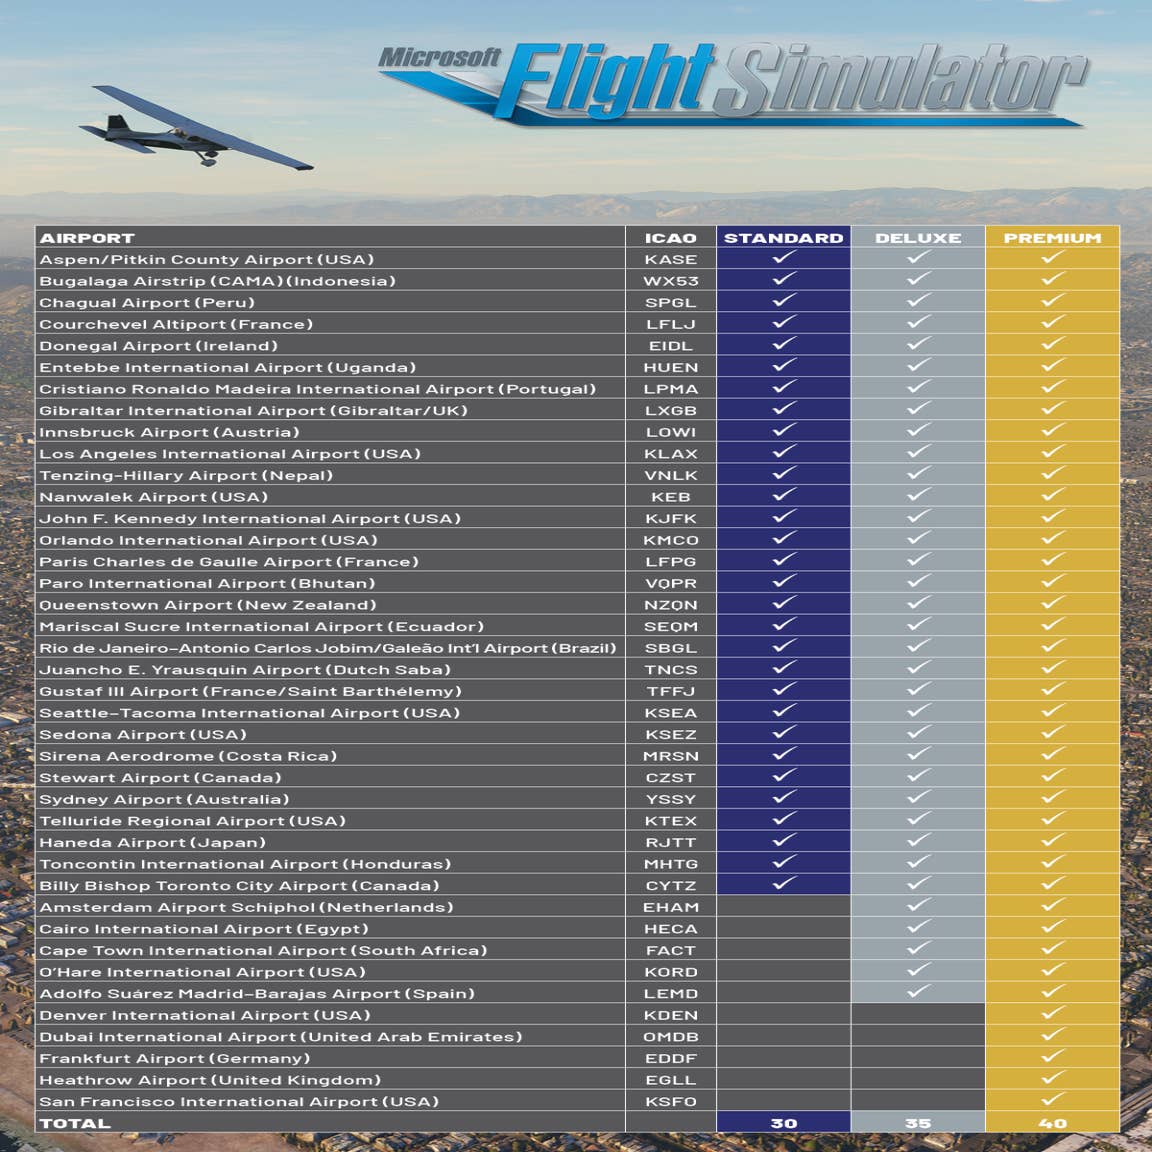 Microsoft Flight Simulator: X coming soon to Steam